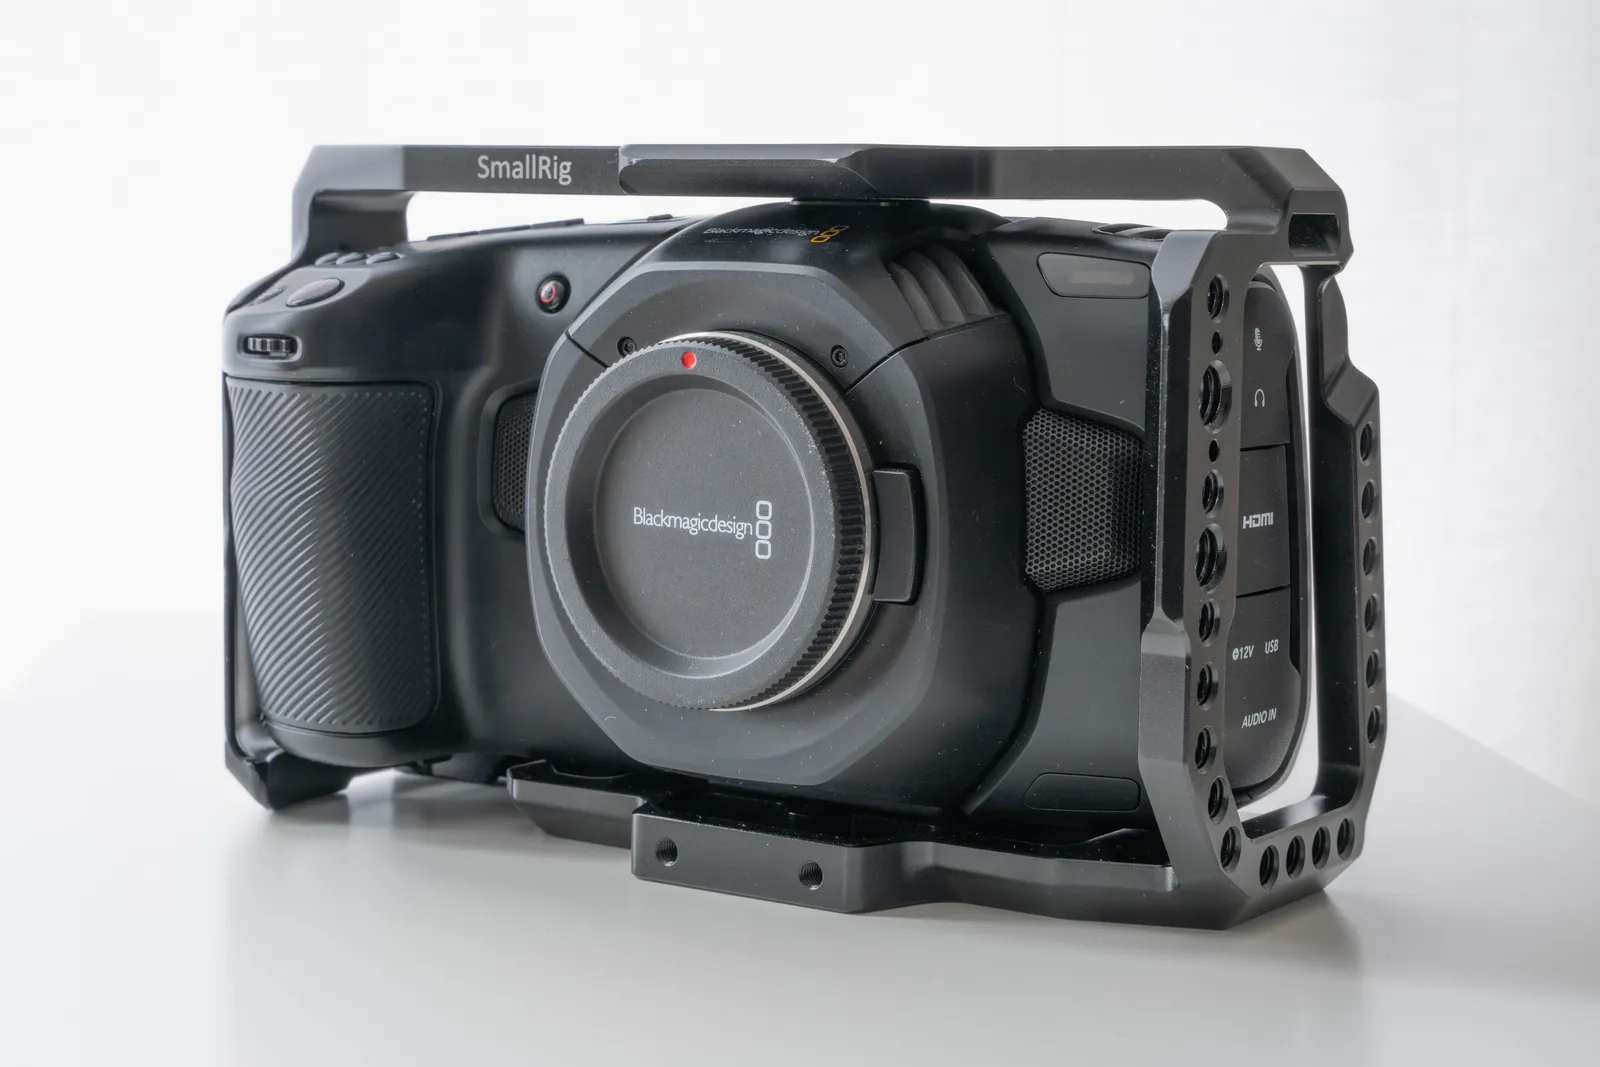 Blackmagic Pocket Cinema Camera 4K Kit From Thomas's Gear Shop On 